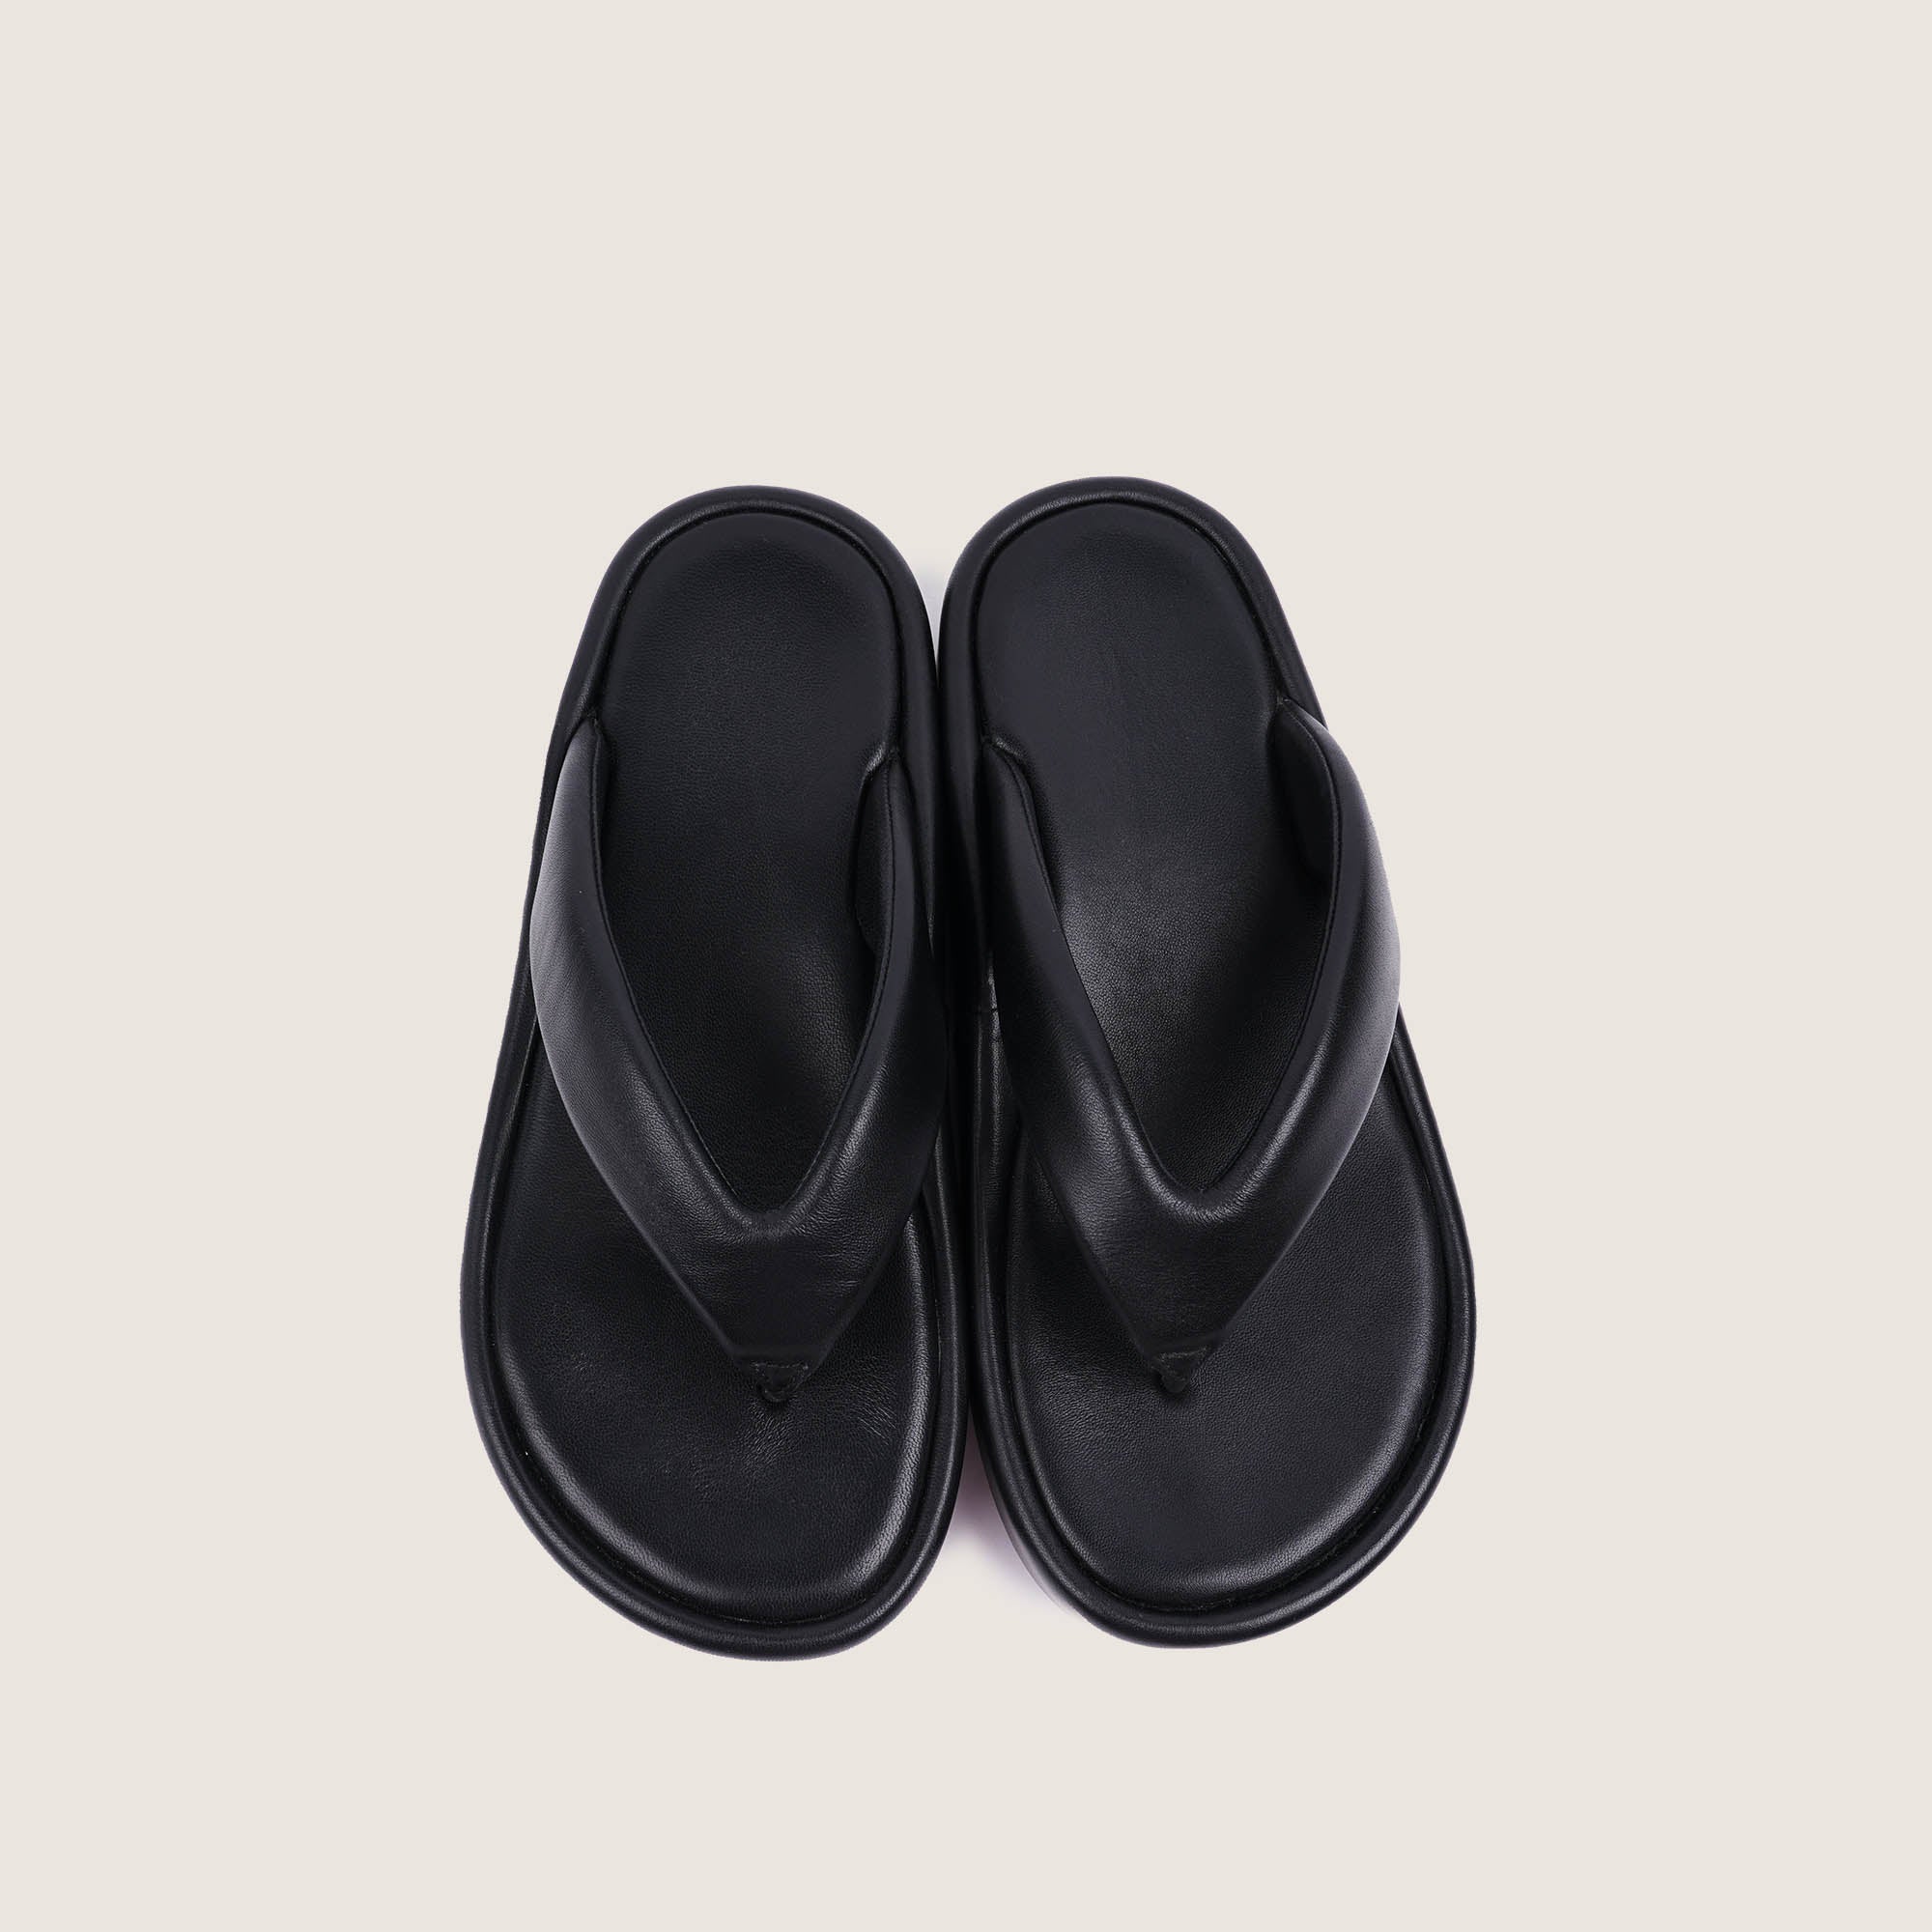 Thong Sandals 38 - BALENCIAGA - Affordable Luxury